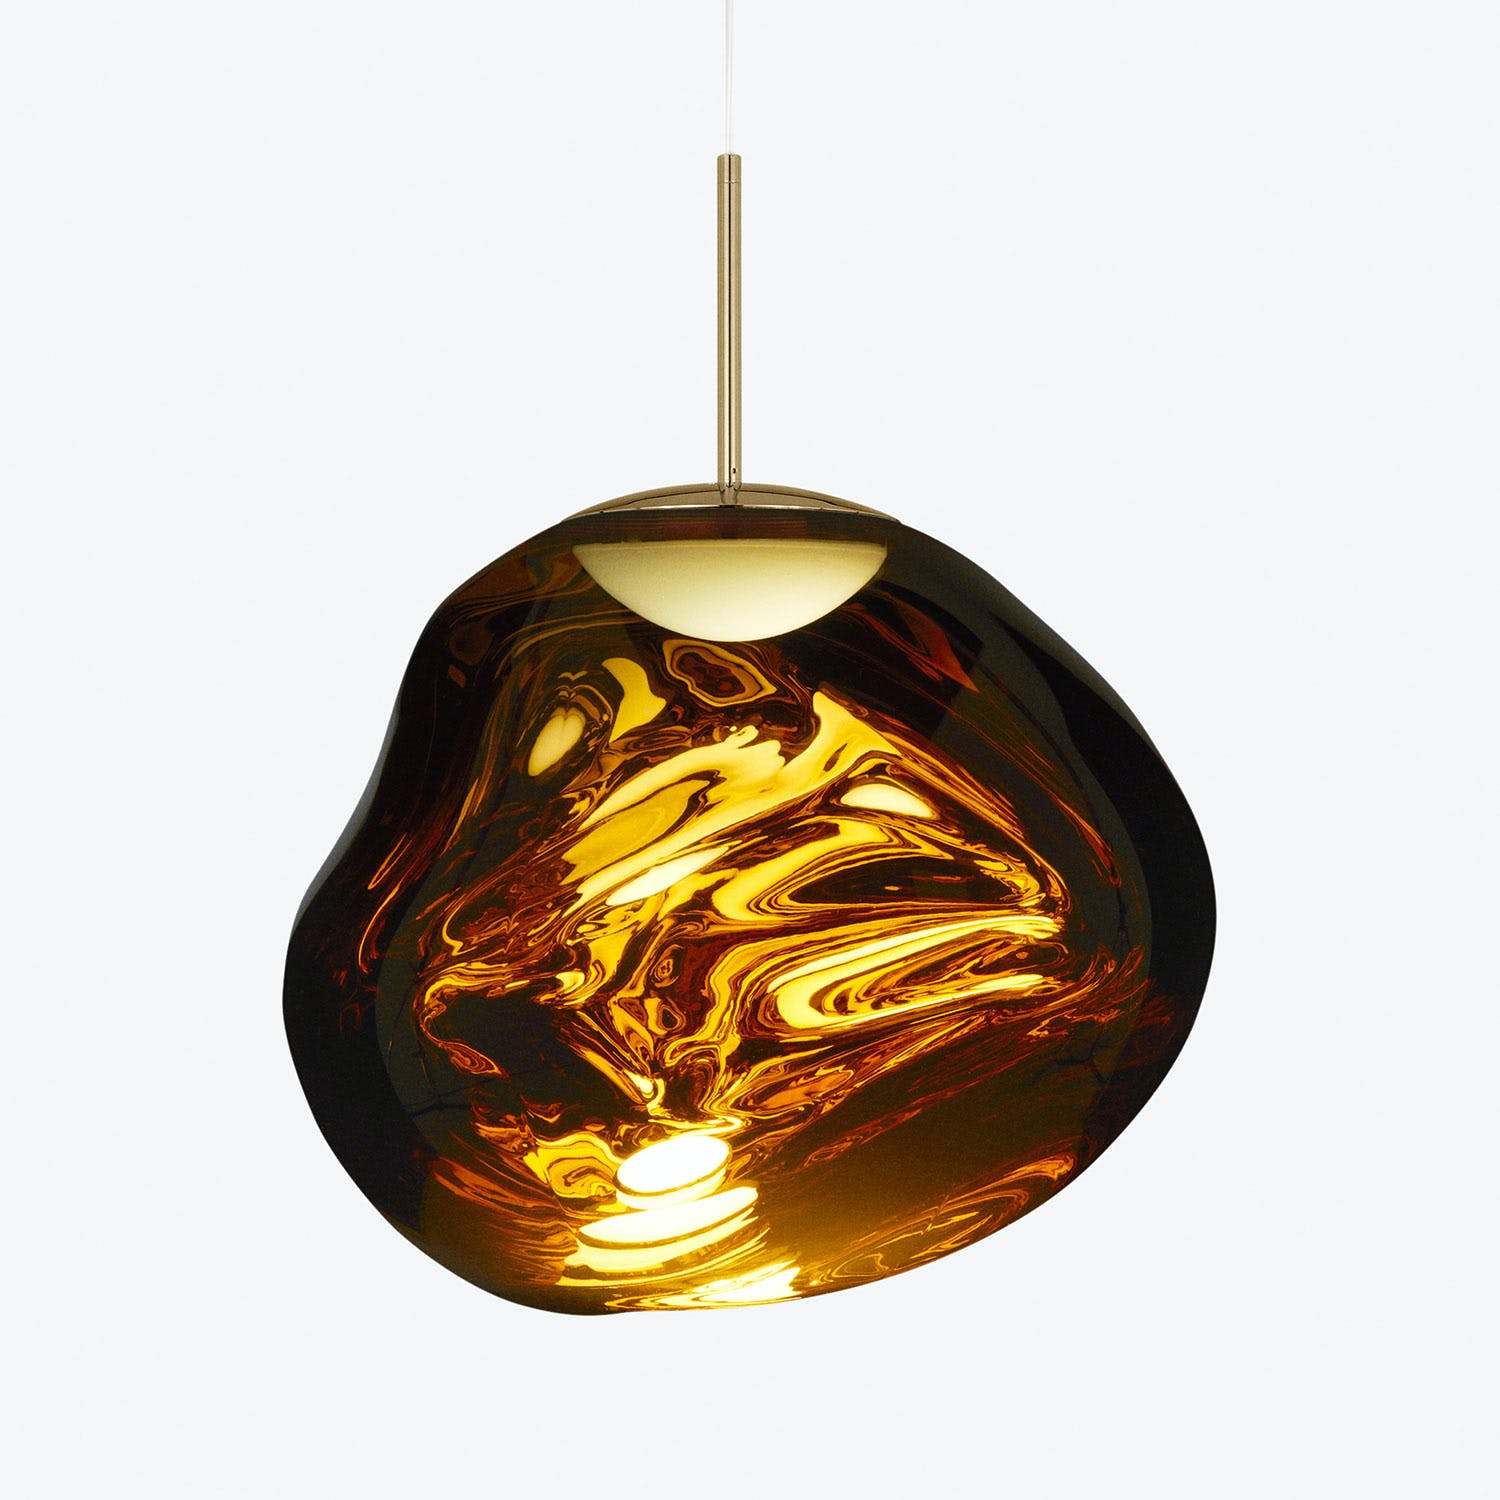 An artistic pendant light with a swirling, molten-like pattern illuminates.